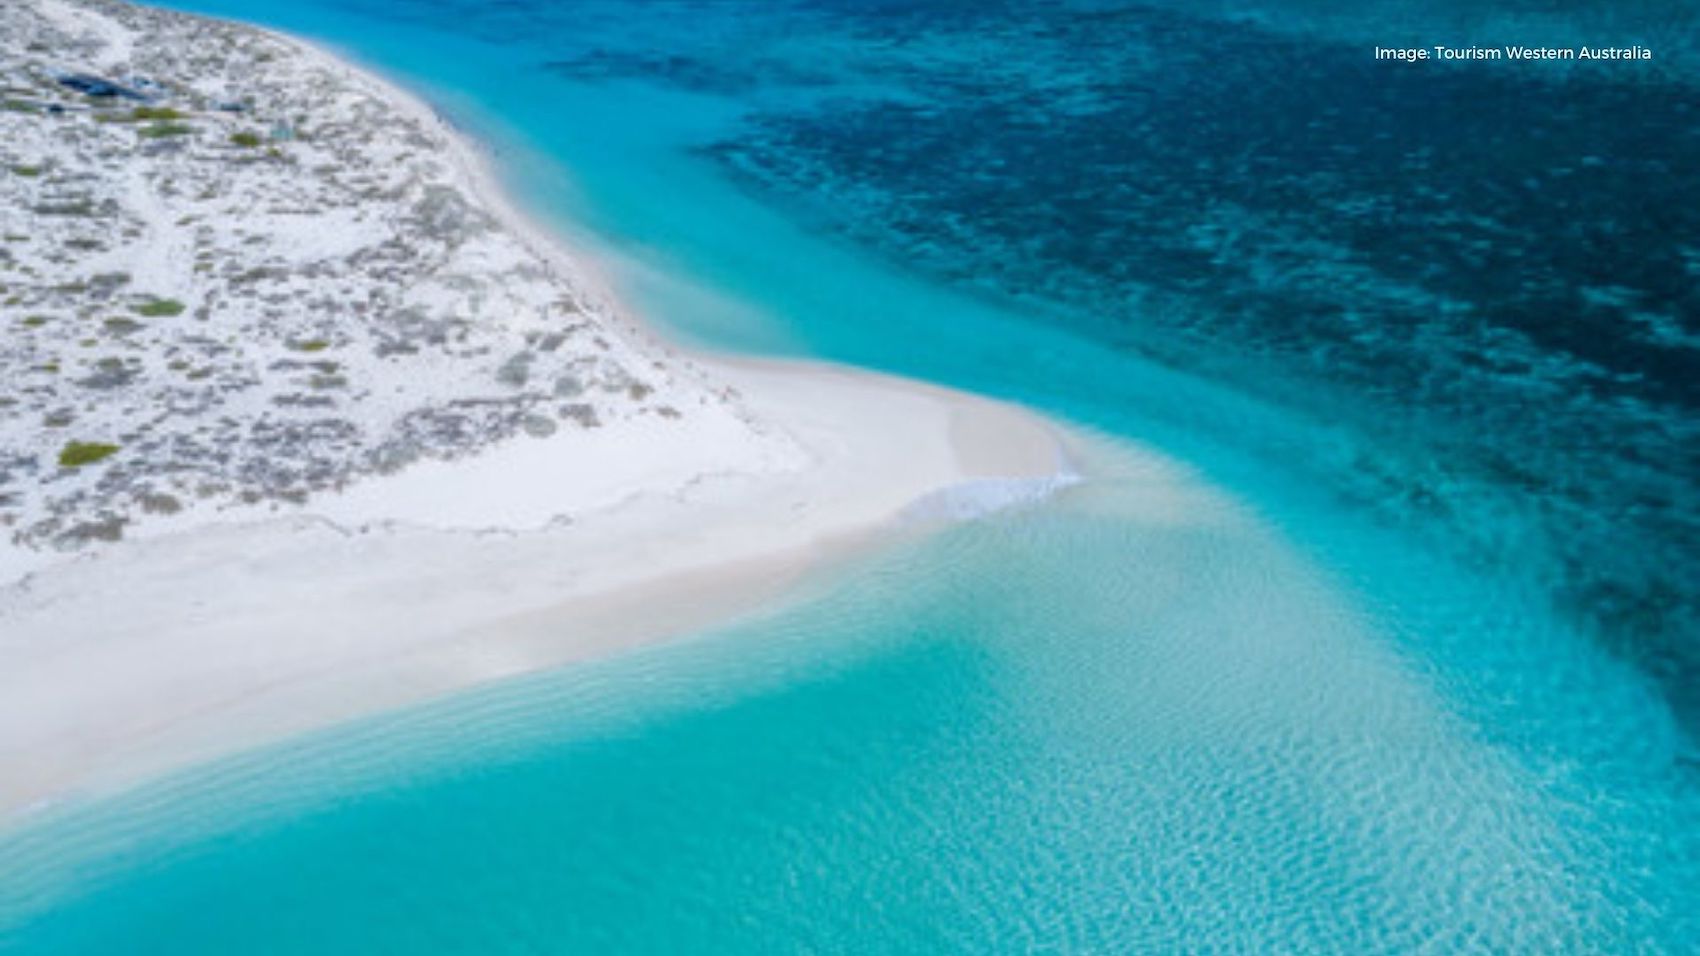 Bright turquoise water surrounding white beach | Tourism Western Australia